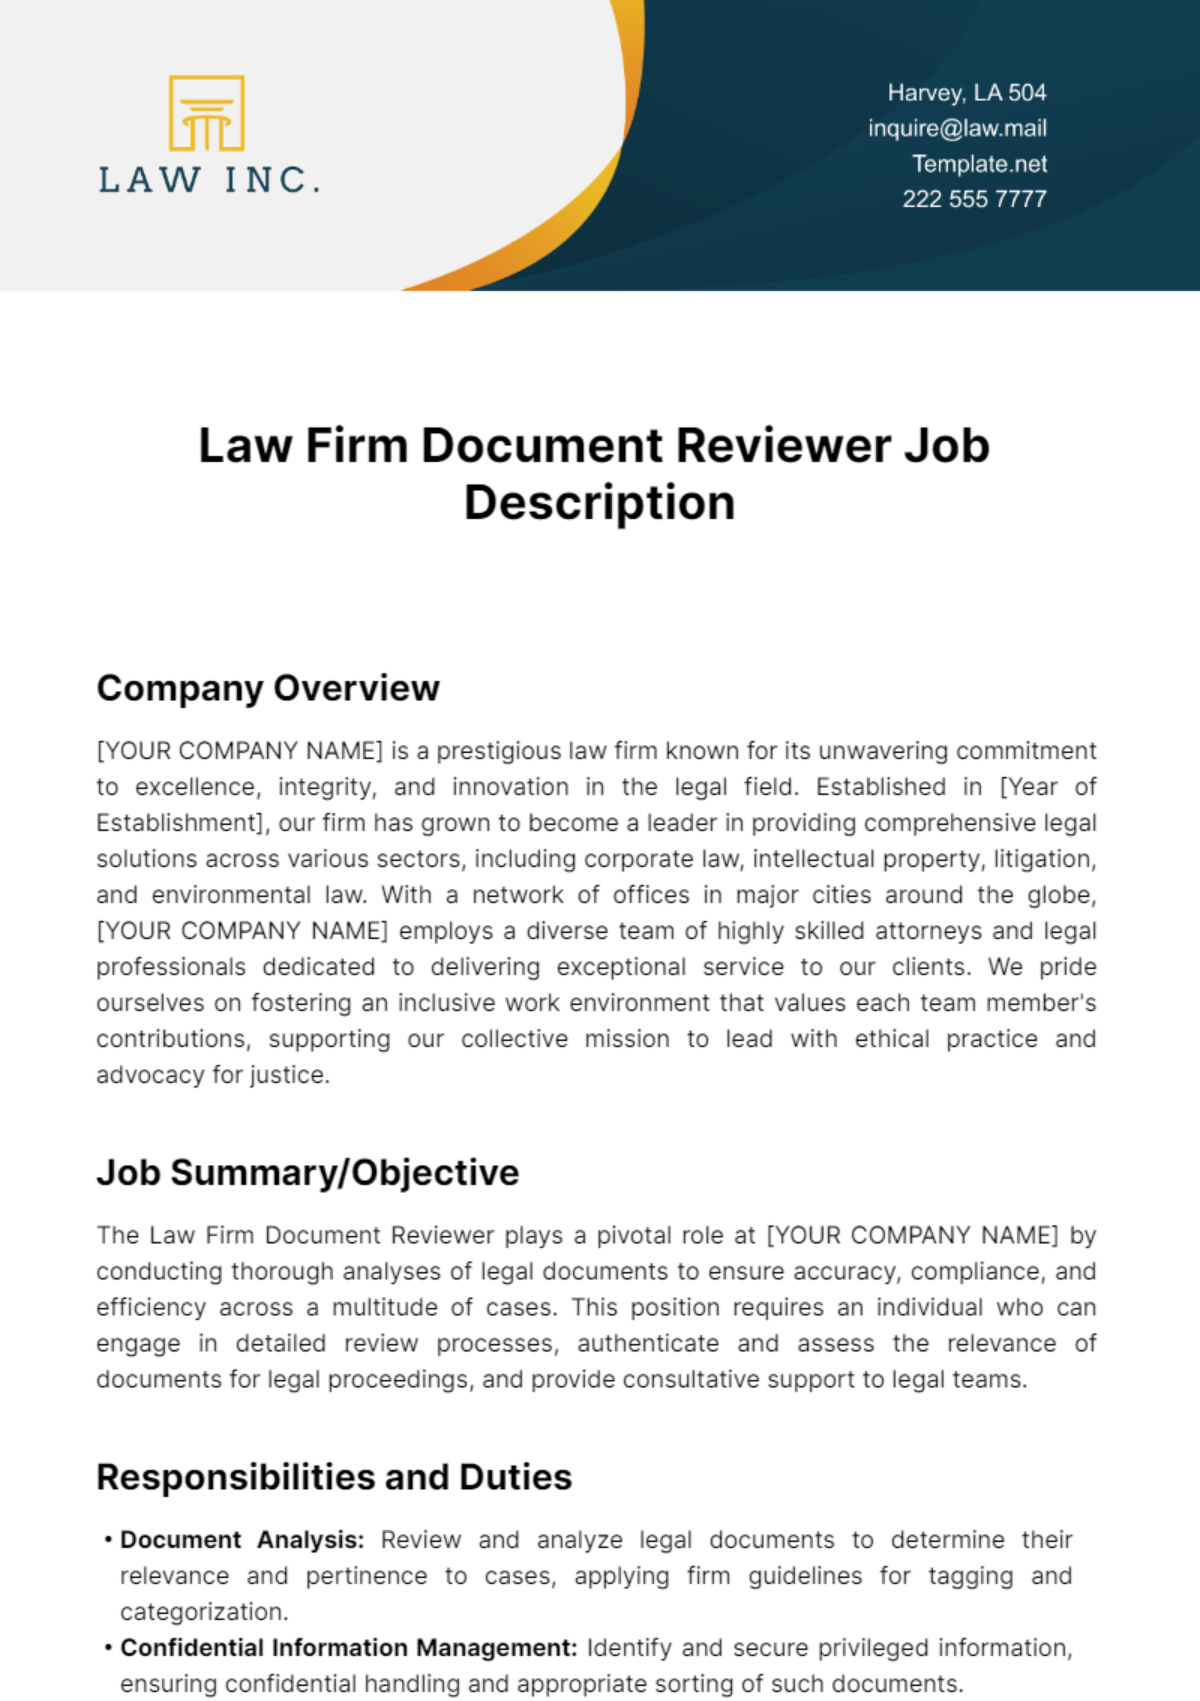 Free Law Firm Document Reviewer Job Description Template